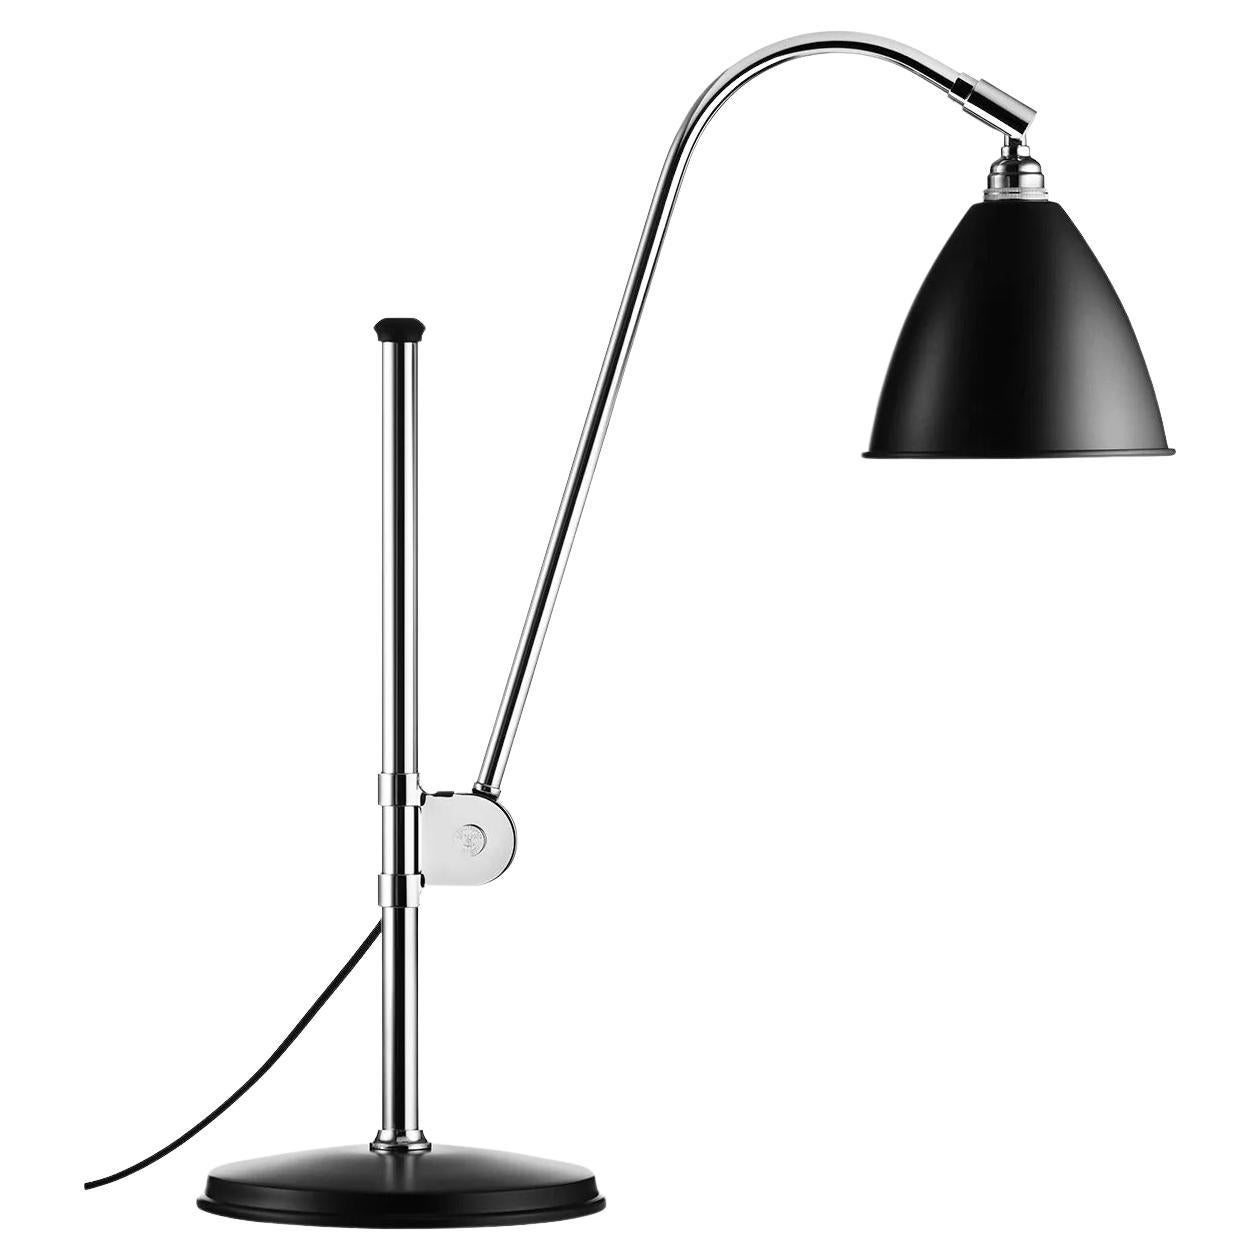 Robert Dudley Bl 1 Table Lamp, Chrome